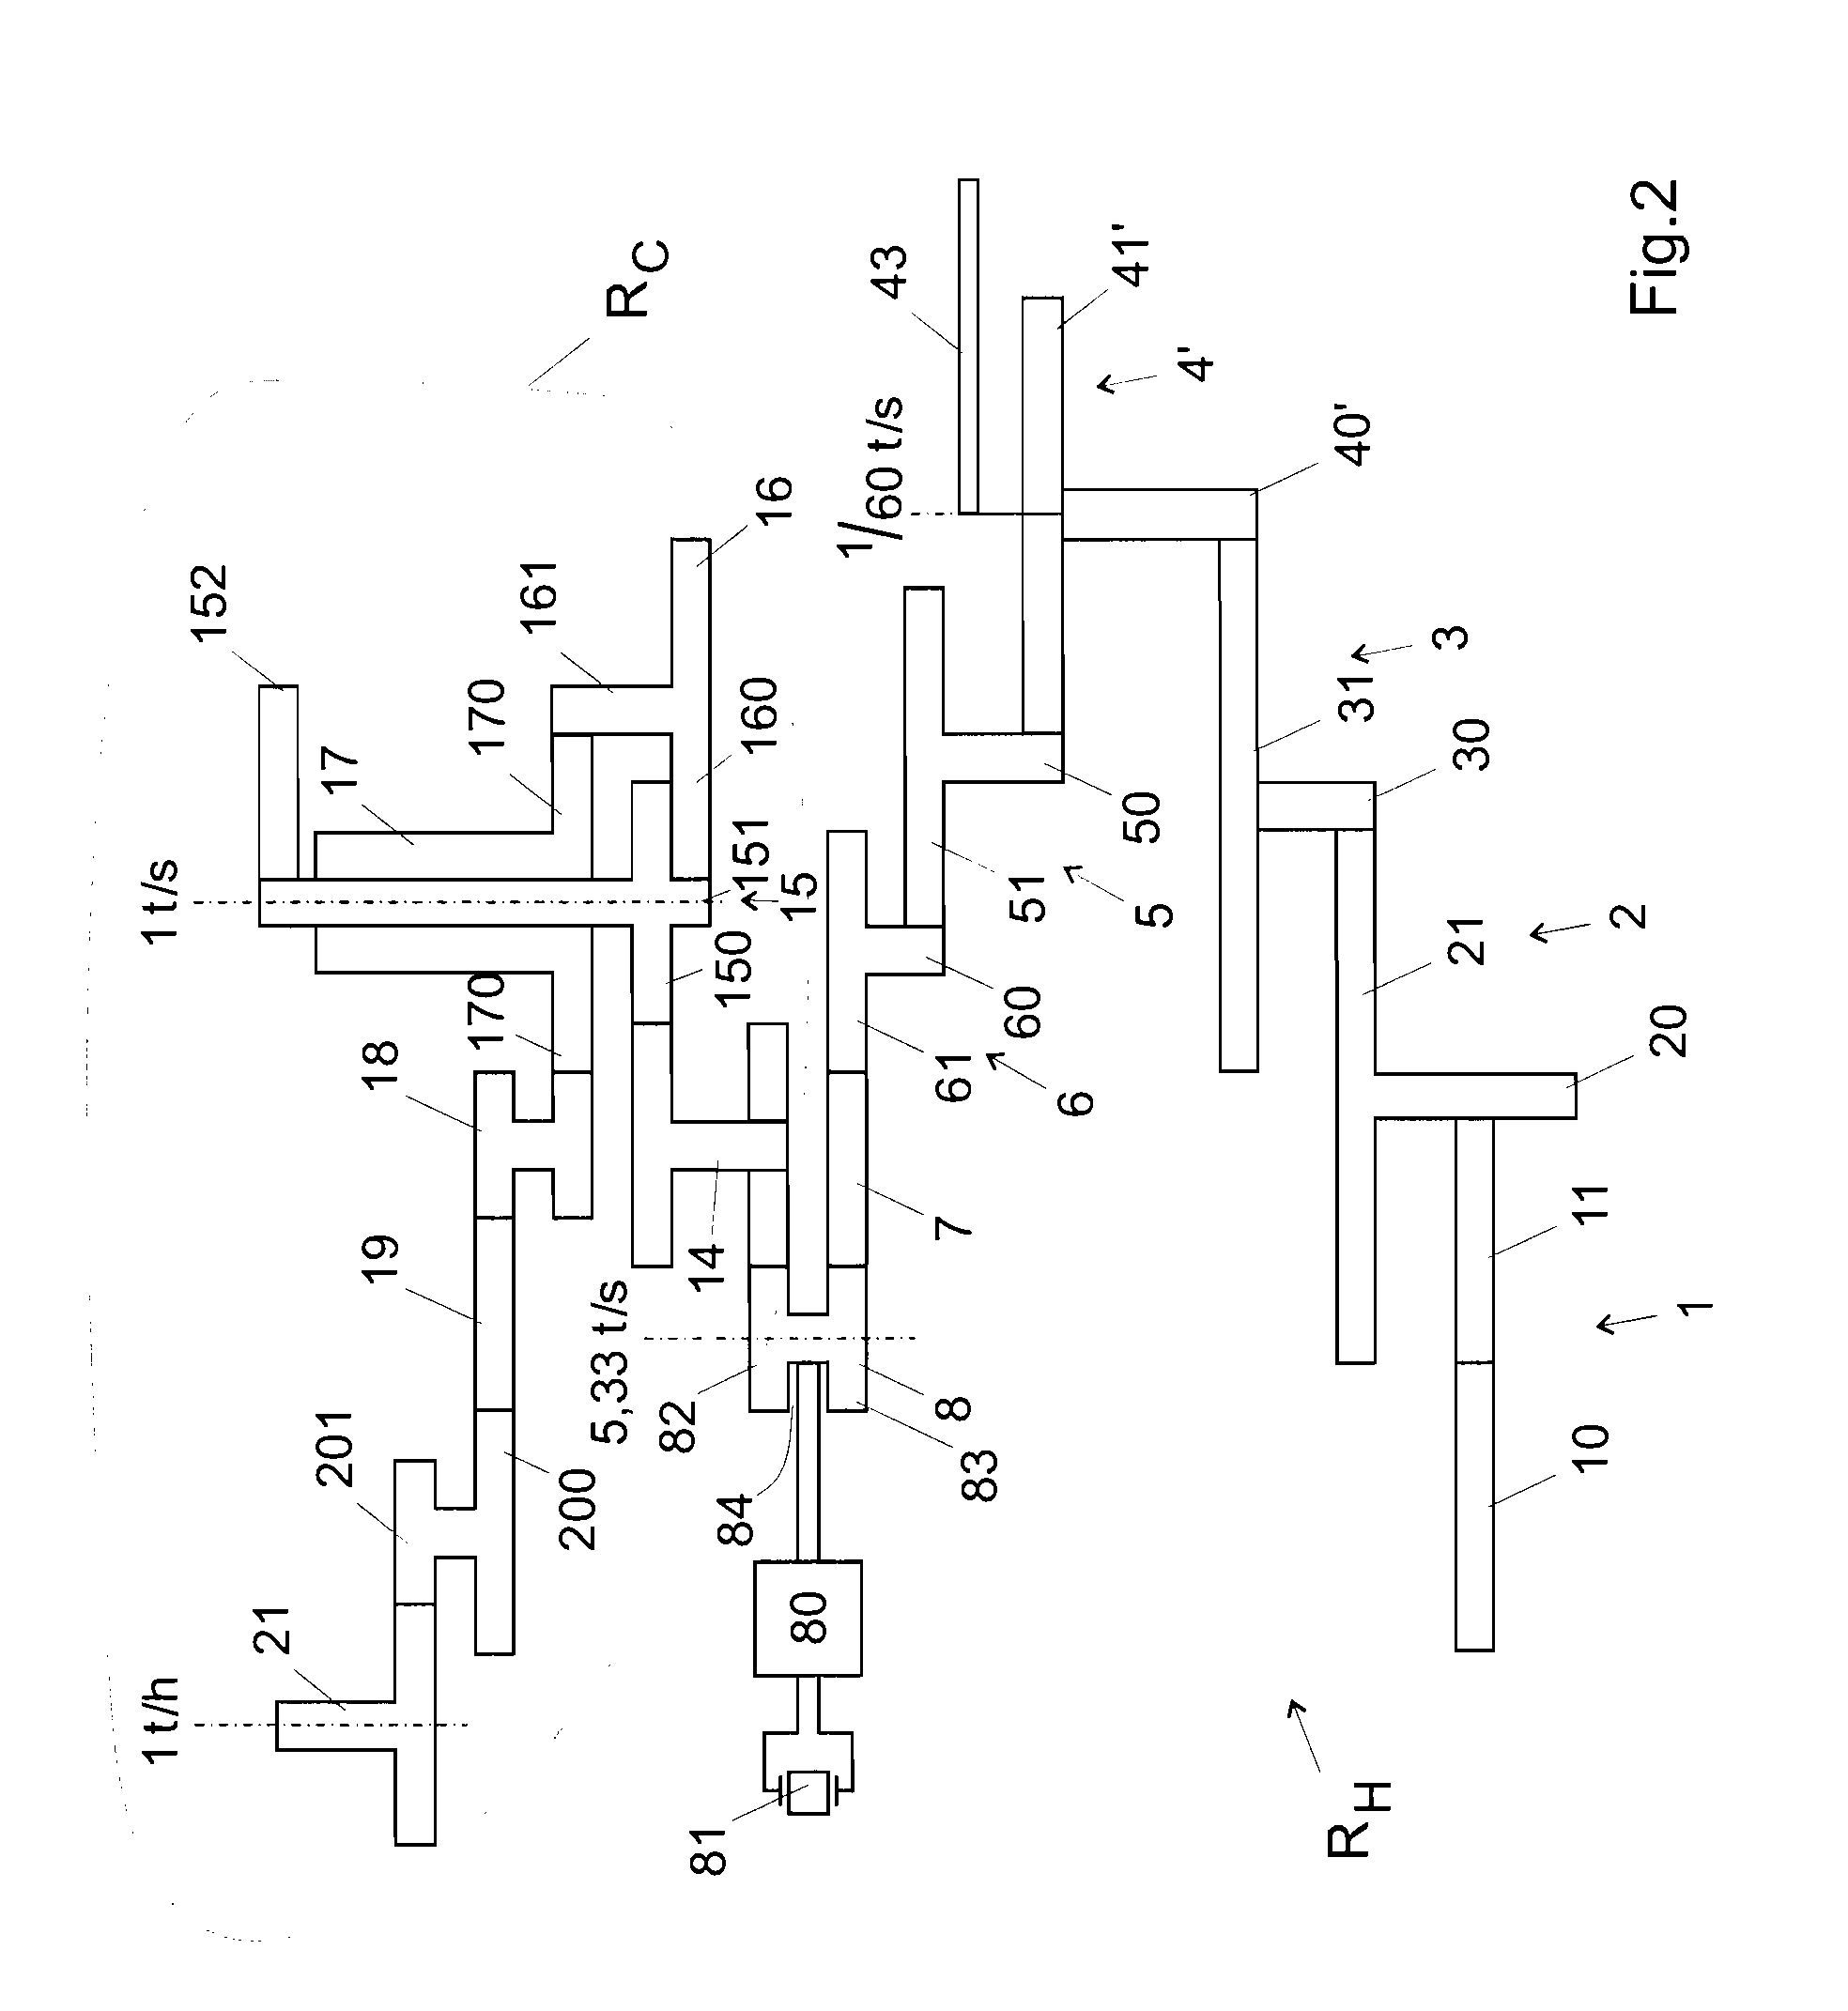 Movement for mechanical chronograph with quartz regulator